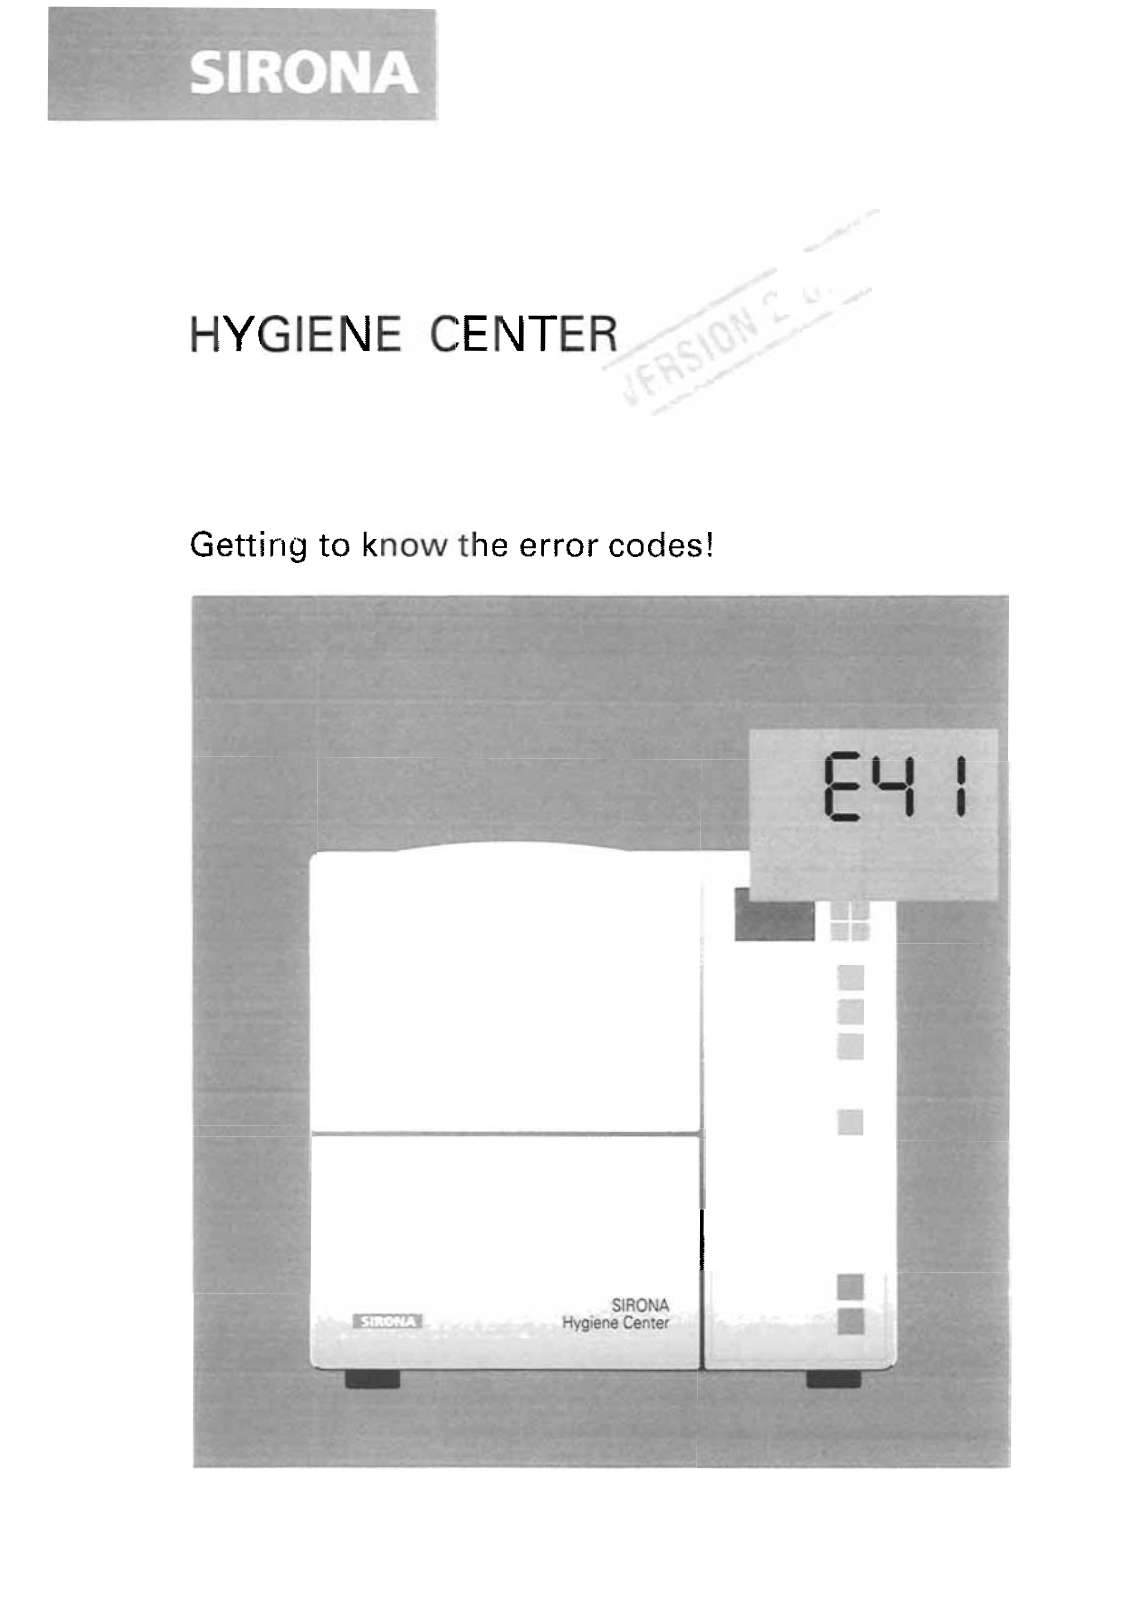 Sirona Hygiene Center Error codes